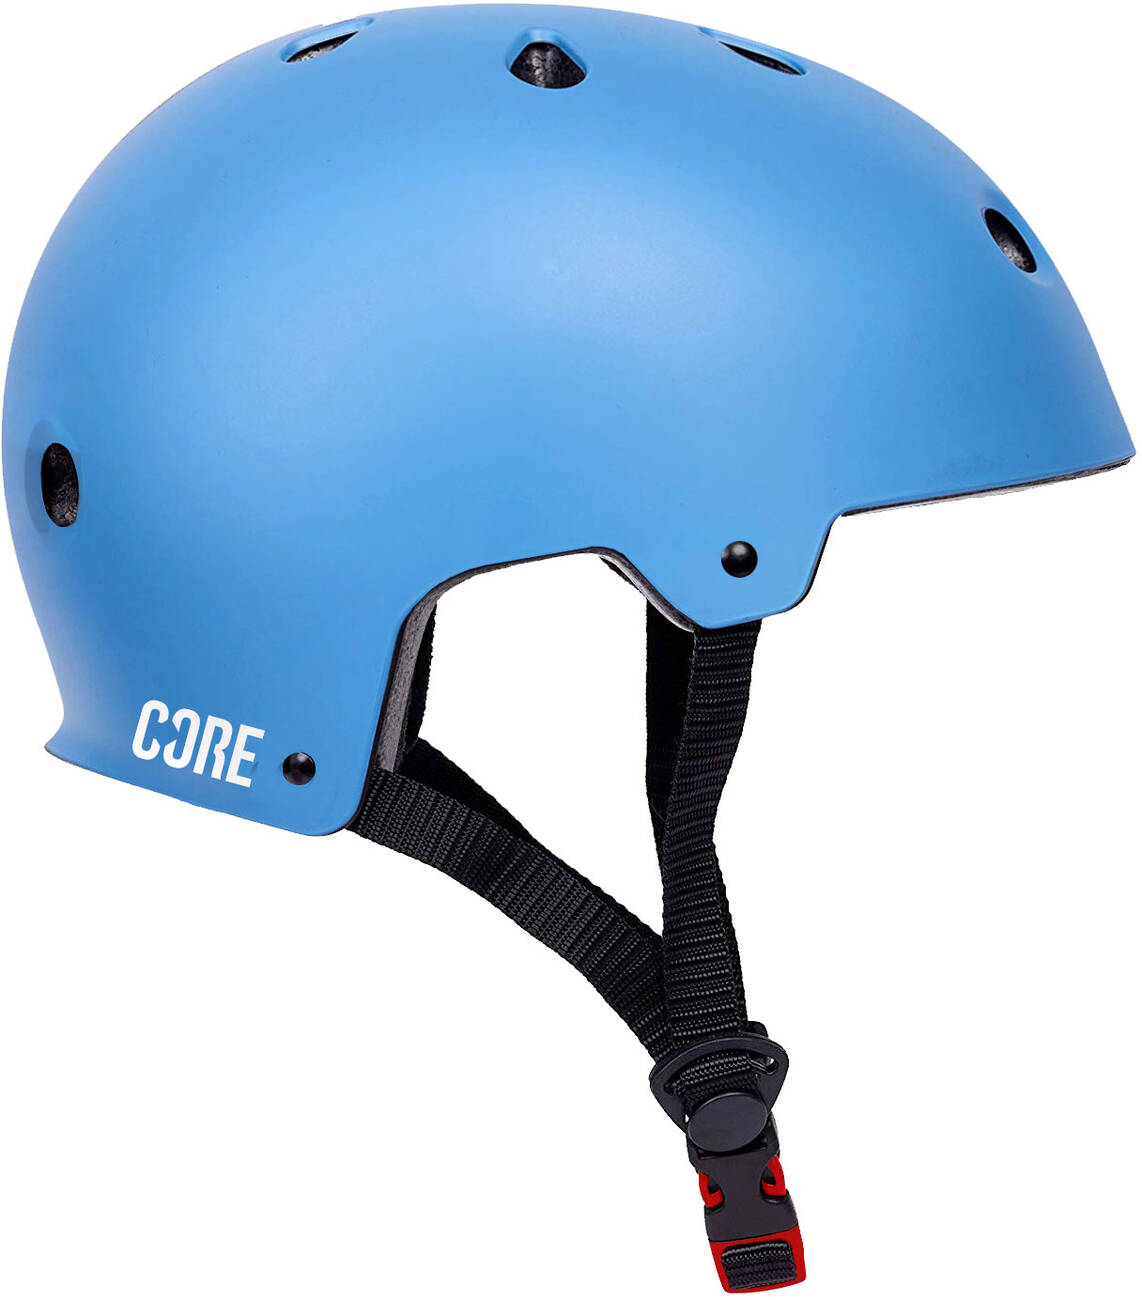 CORE Action Sports Helm Skate und Fahrradhelm blau XS-S